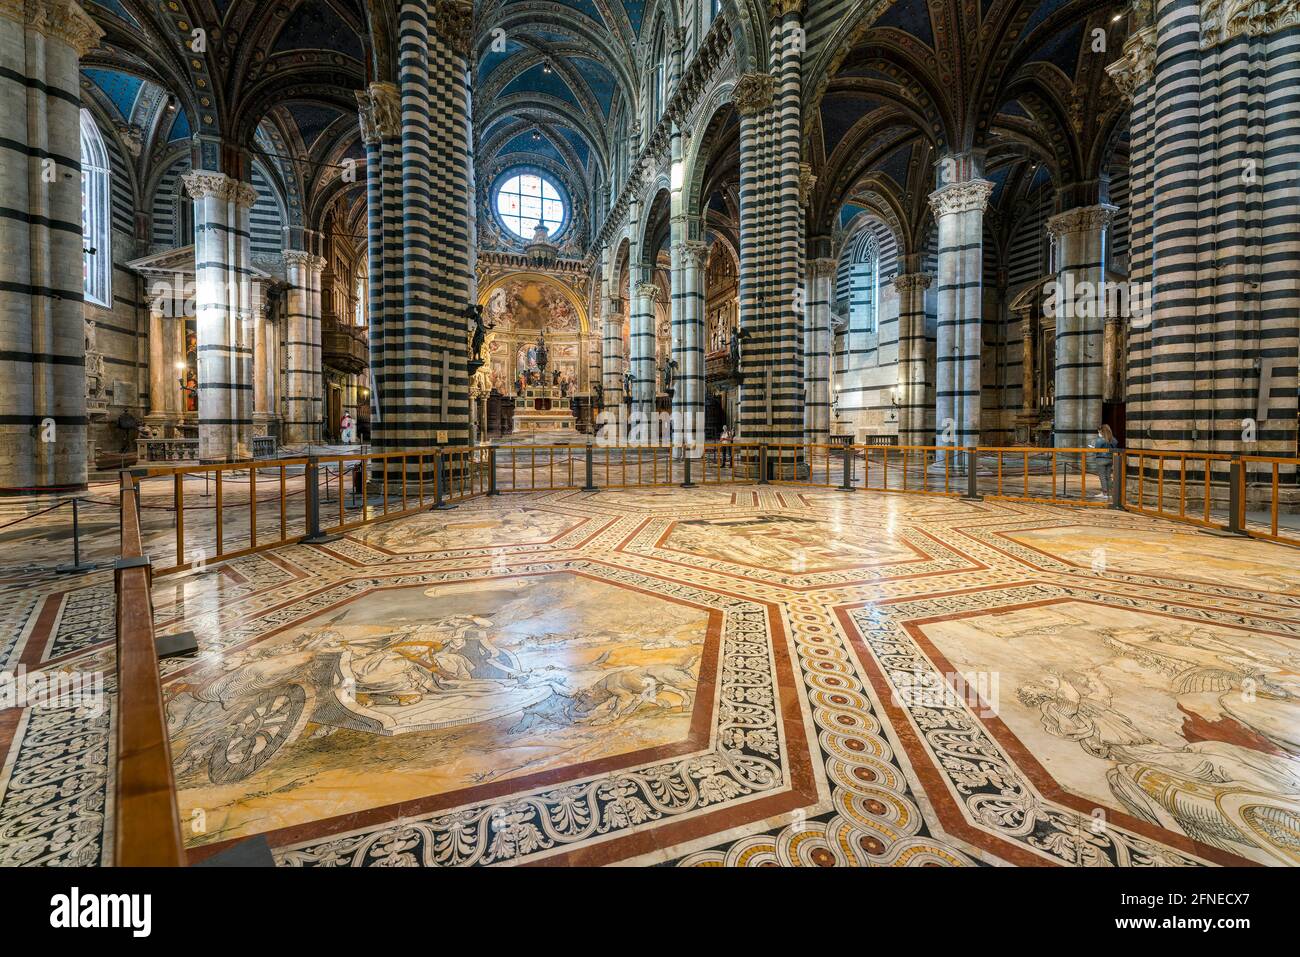 Kreuzung mit Chor und Marmorboden, Kathedrale von Siena, Duomo Santa Maria Assunta, Siena, Toskana, Italien Stockfoto